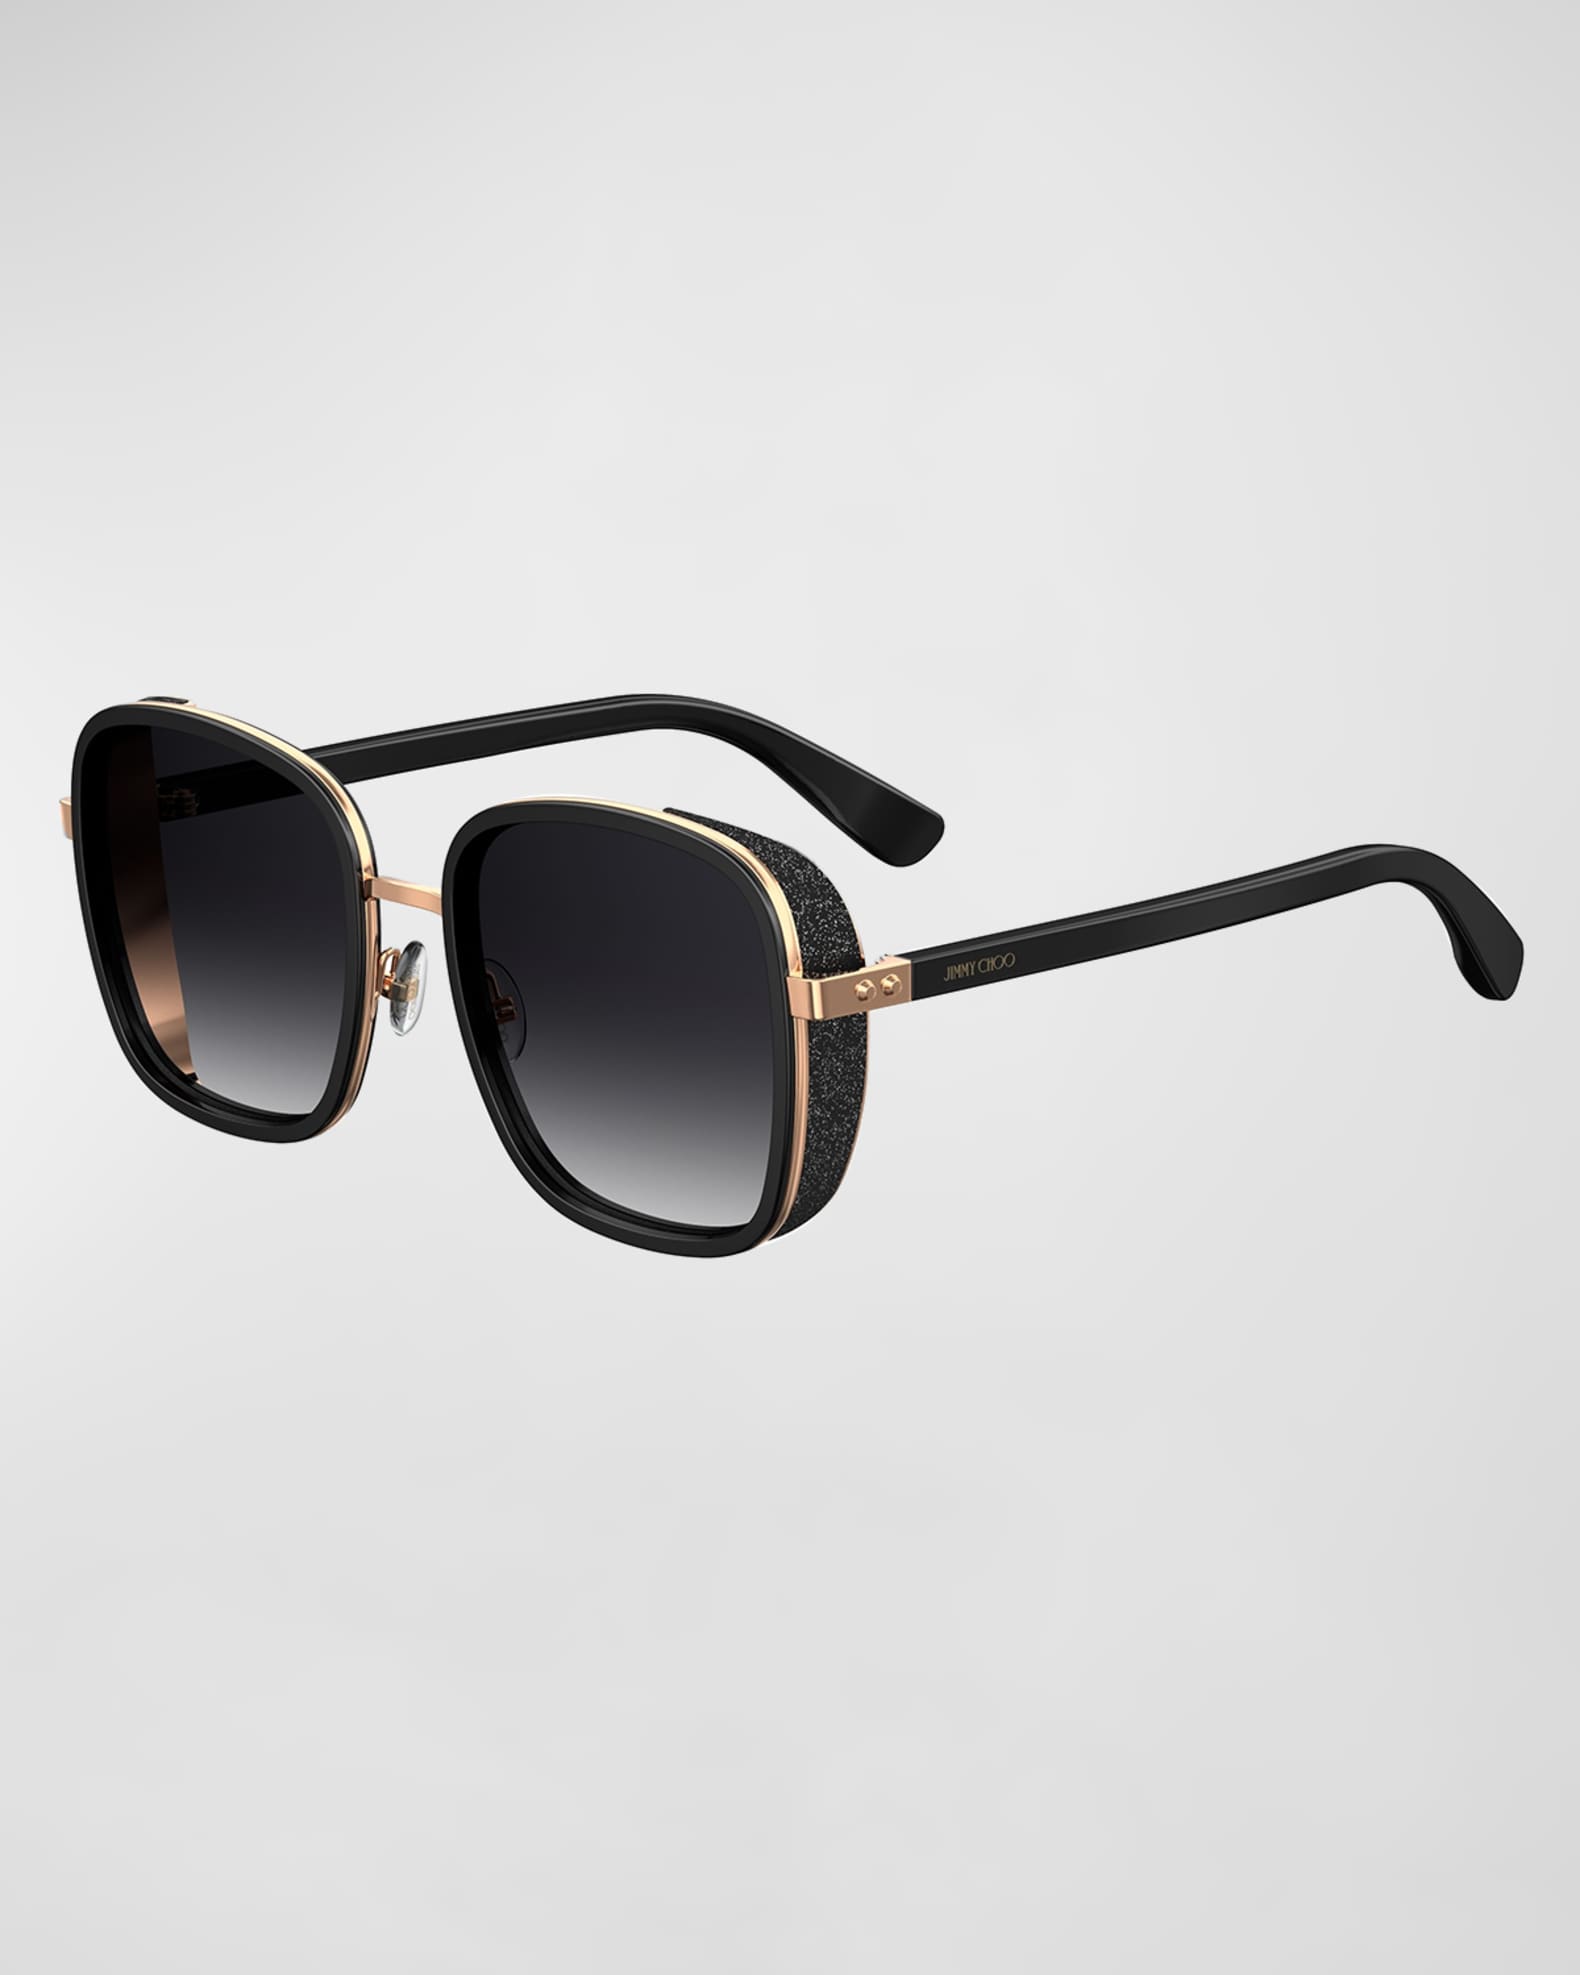 Jimmy Choo Elvas Mirrored Square Sunglasses | Neiman Marcus